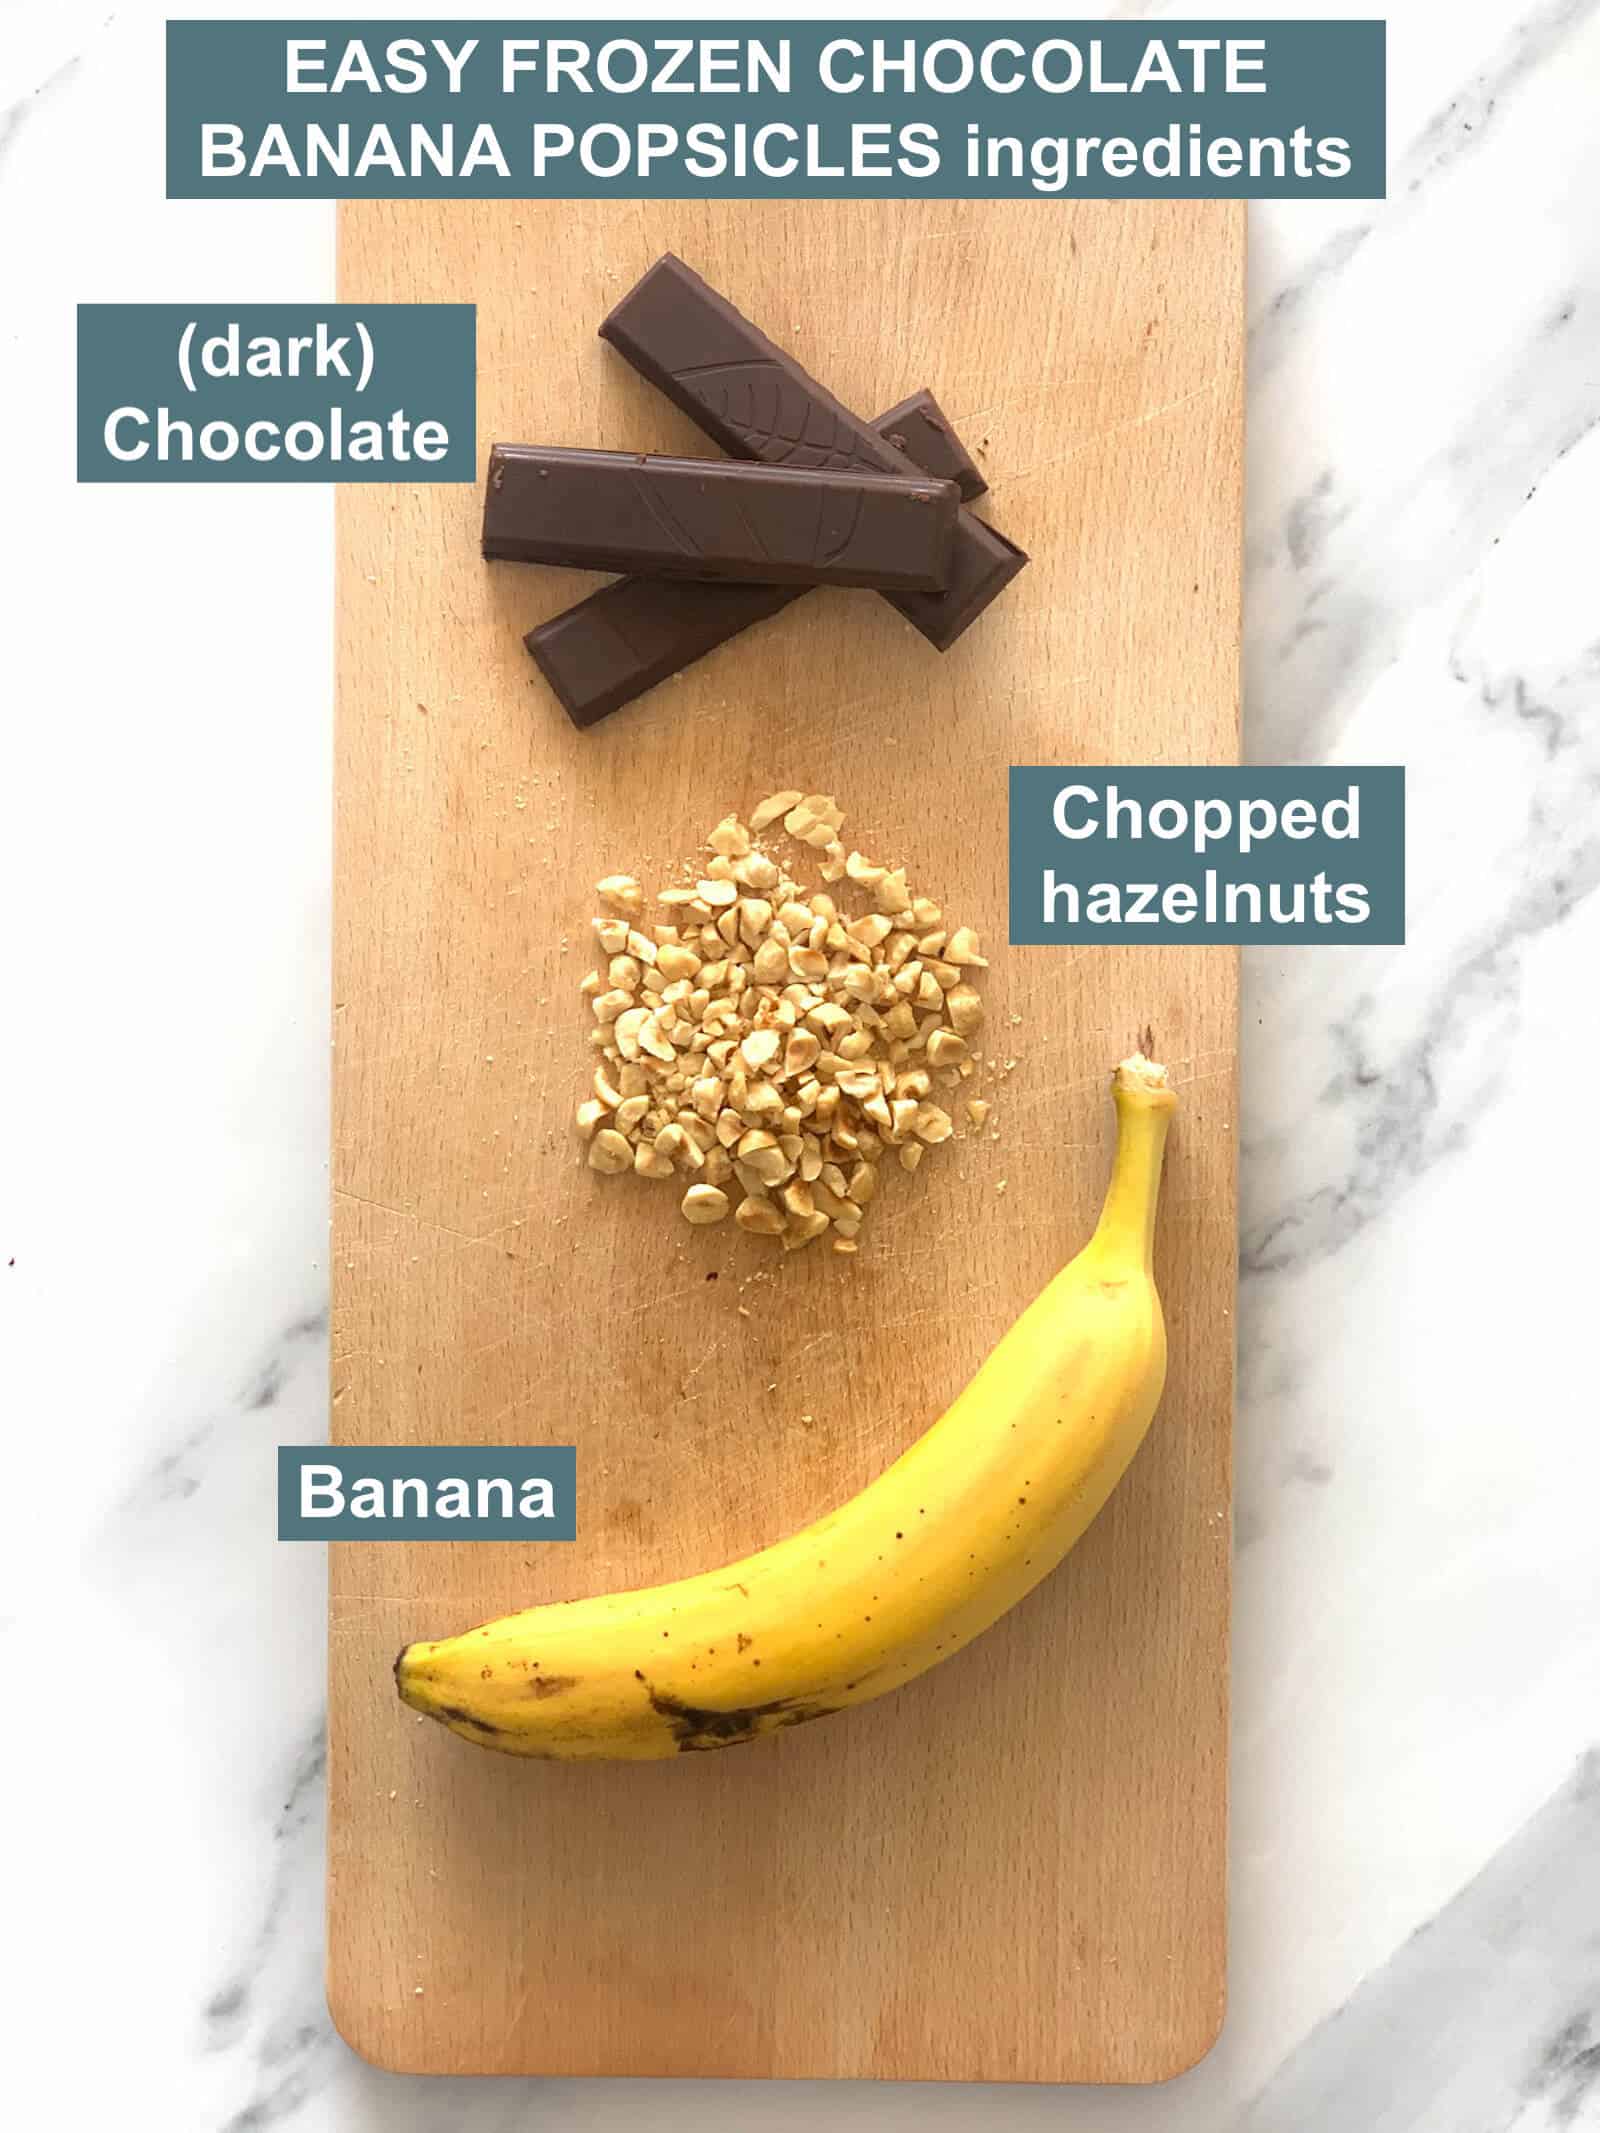 ingredients - chocolate, banana, hazelnuts